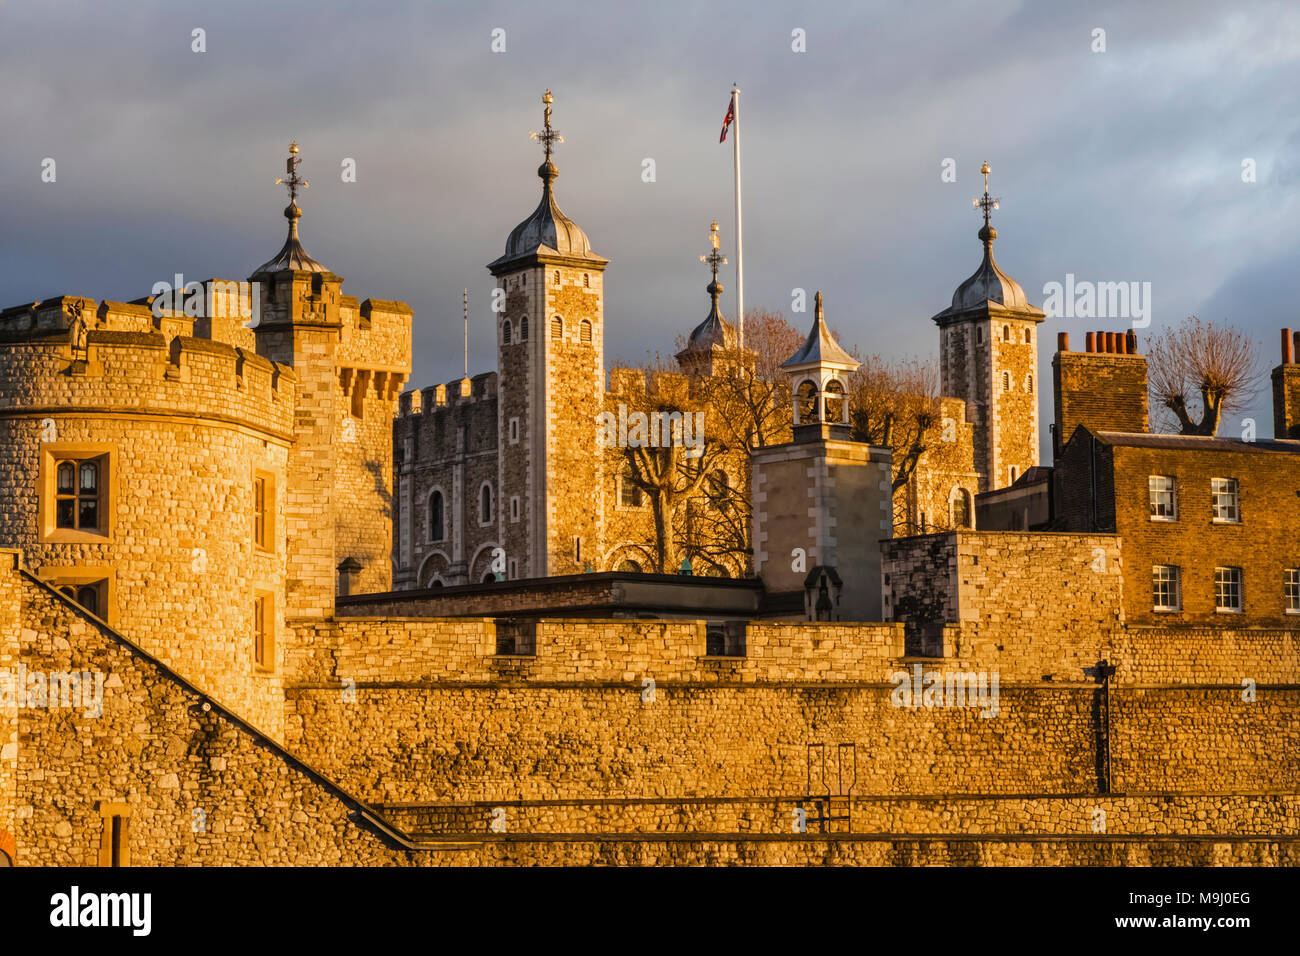 England, London, Tower of London Stock Photo